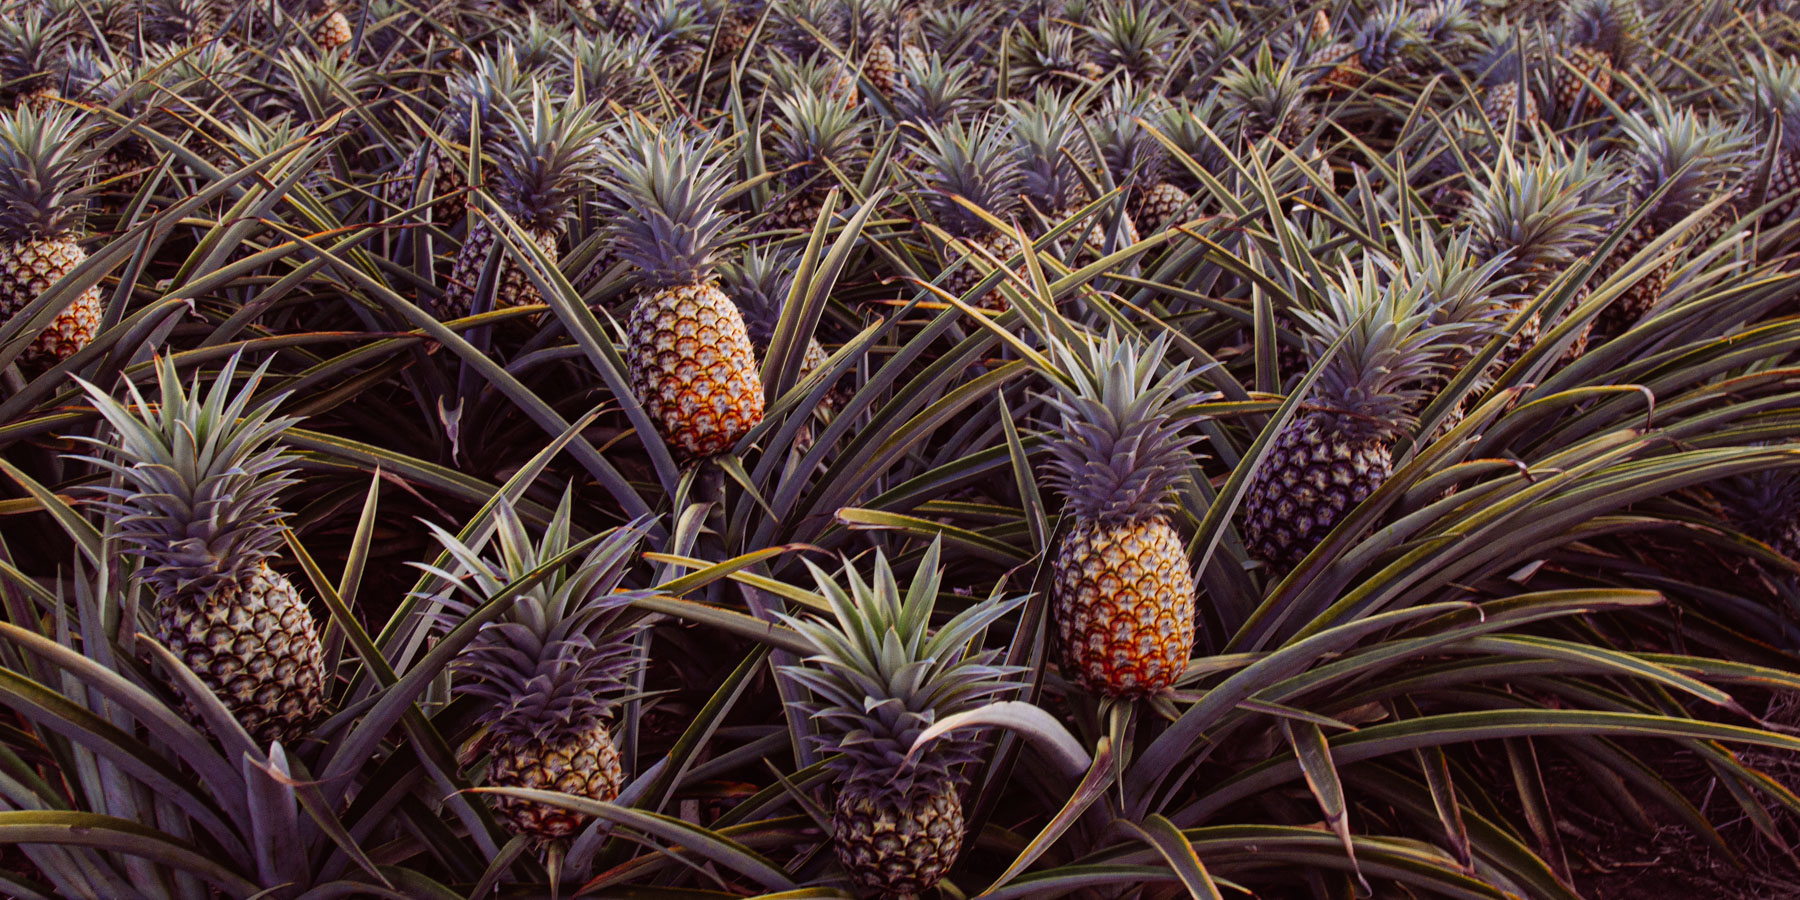 Pineapples growing in a field - not on Yeppoon Pineapple Train Trail